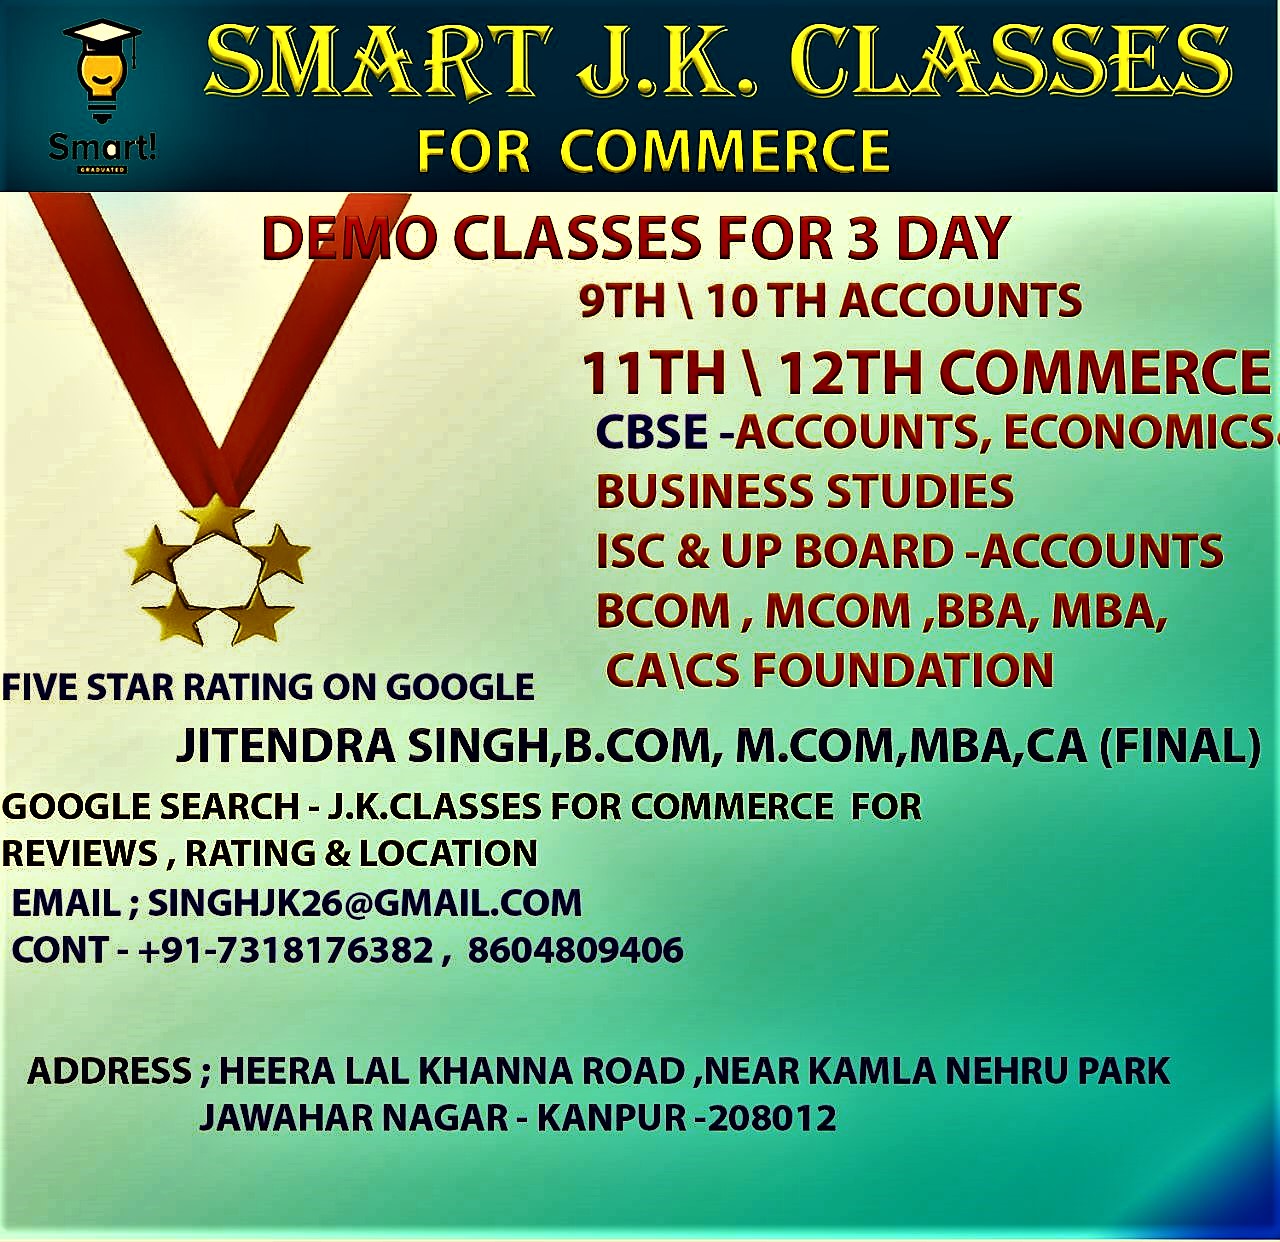 24097SMART JK CLASSES FOR COMMERCE
Class 11th & 12th B.Com M.Com BBA MBA CA/CMA Inter